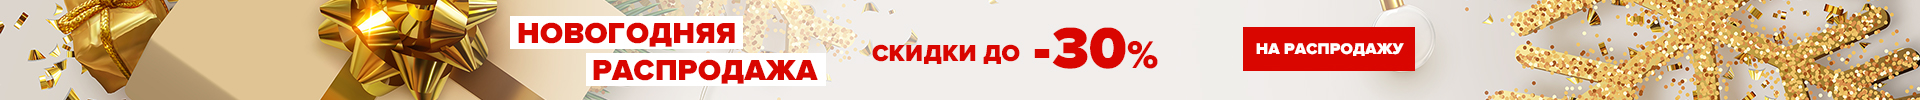 Orental Ru Интернет Магазин Элитной Парфюмерии